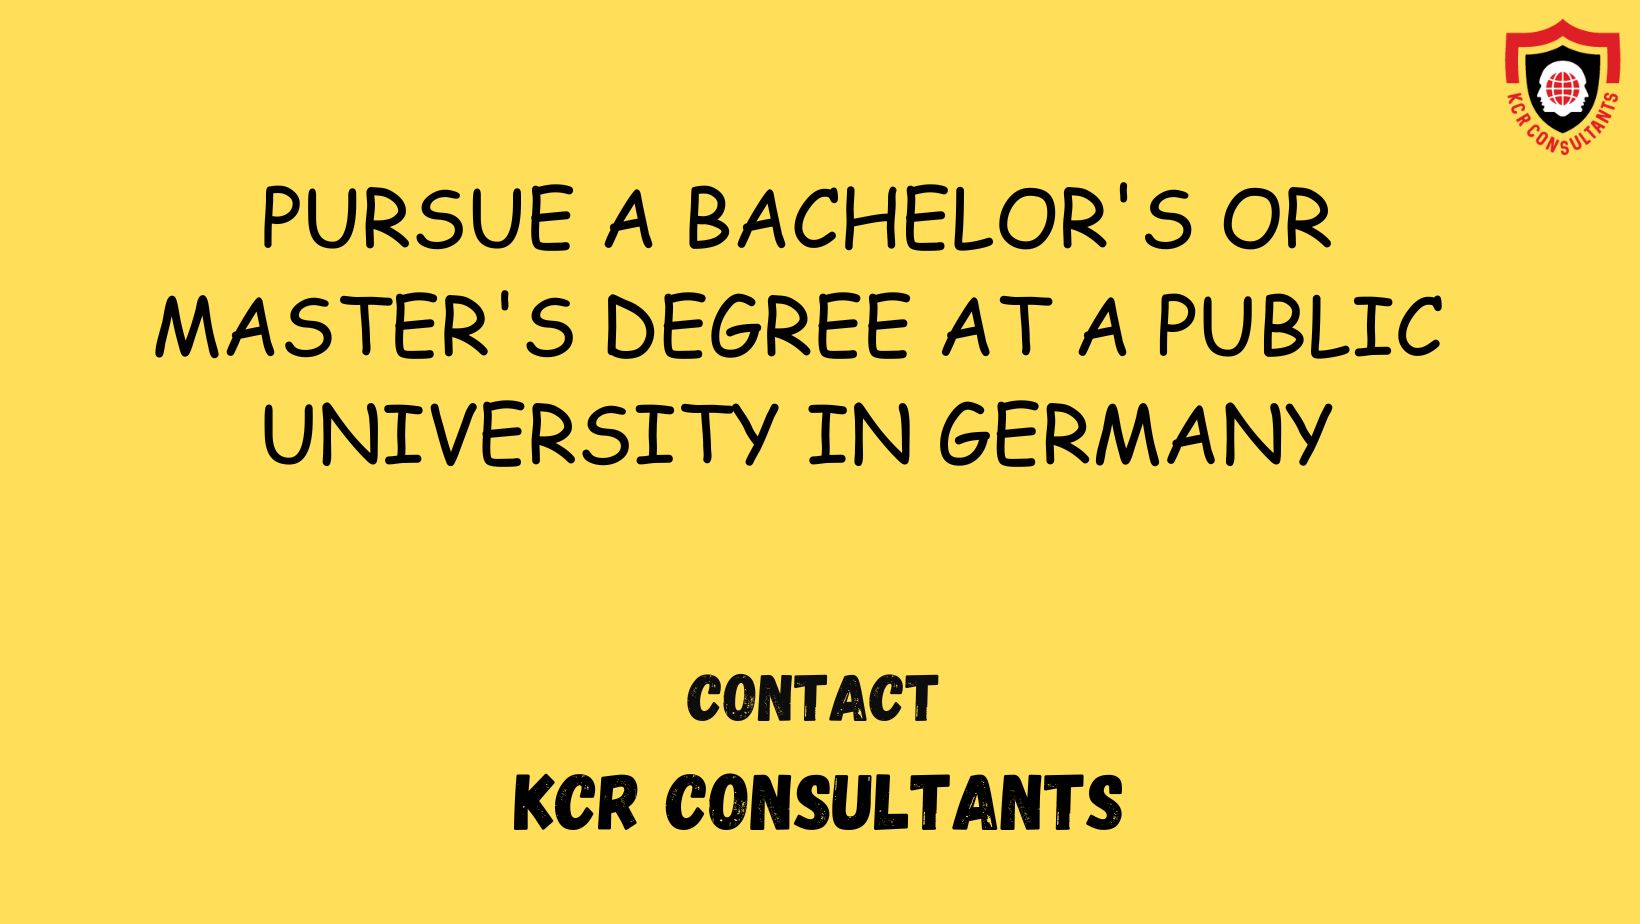 Berlin - Contact us - KCR CONSULTANTS